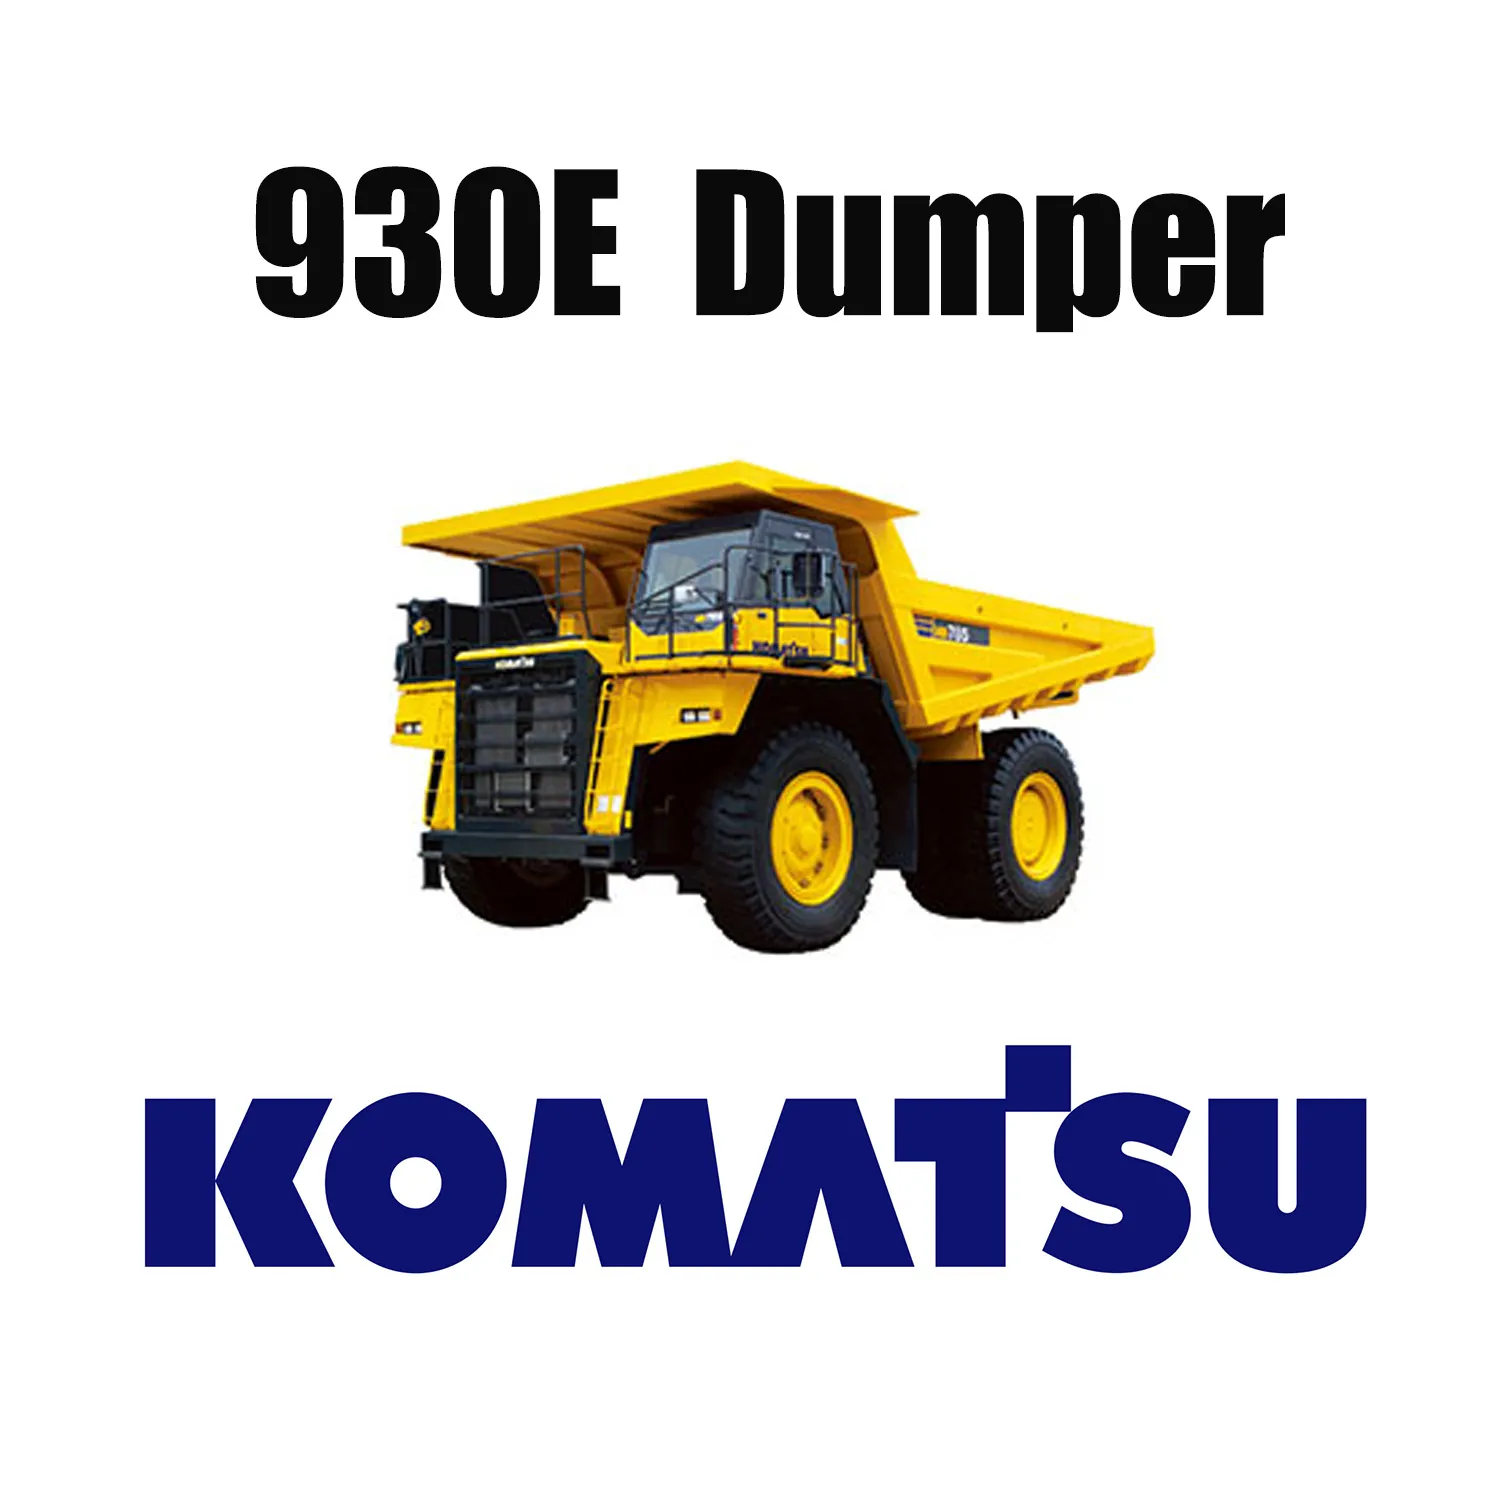 53/80R63 ยางสำหรับทำเหมืองพื้นผิวถนนที่ใช้สำหรับ KOMATSU 930E